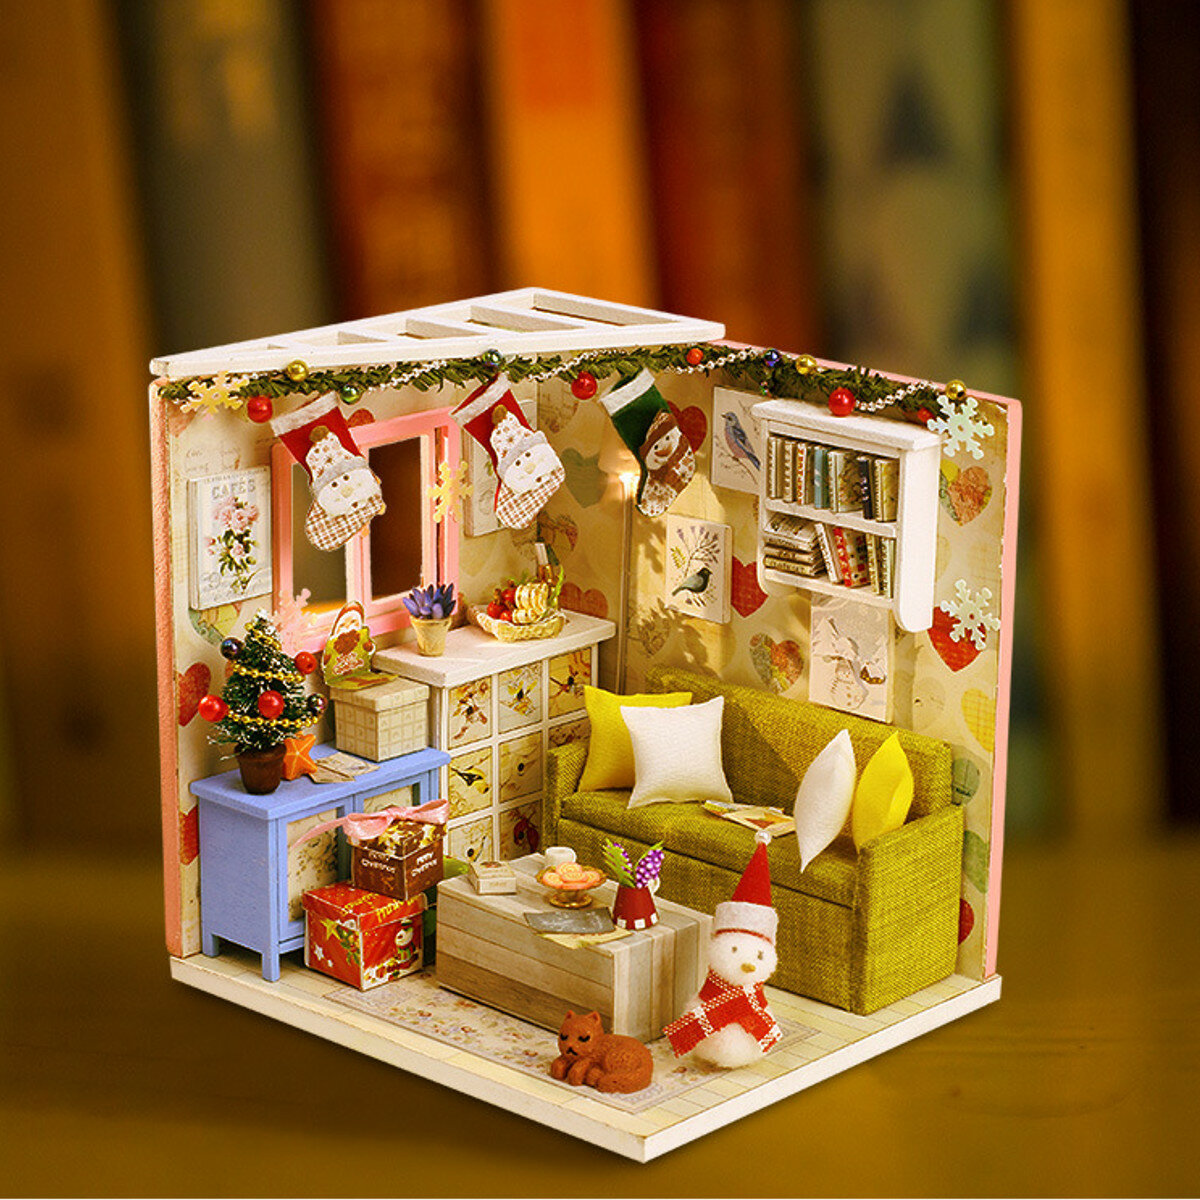 Iiecreate DIY Doll House House Handmade Assembled Educational Toy Art House Christmas Gift Creative Birthday Gift With D